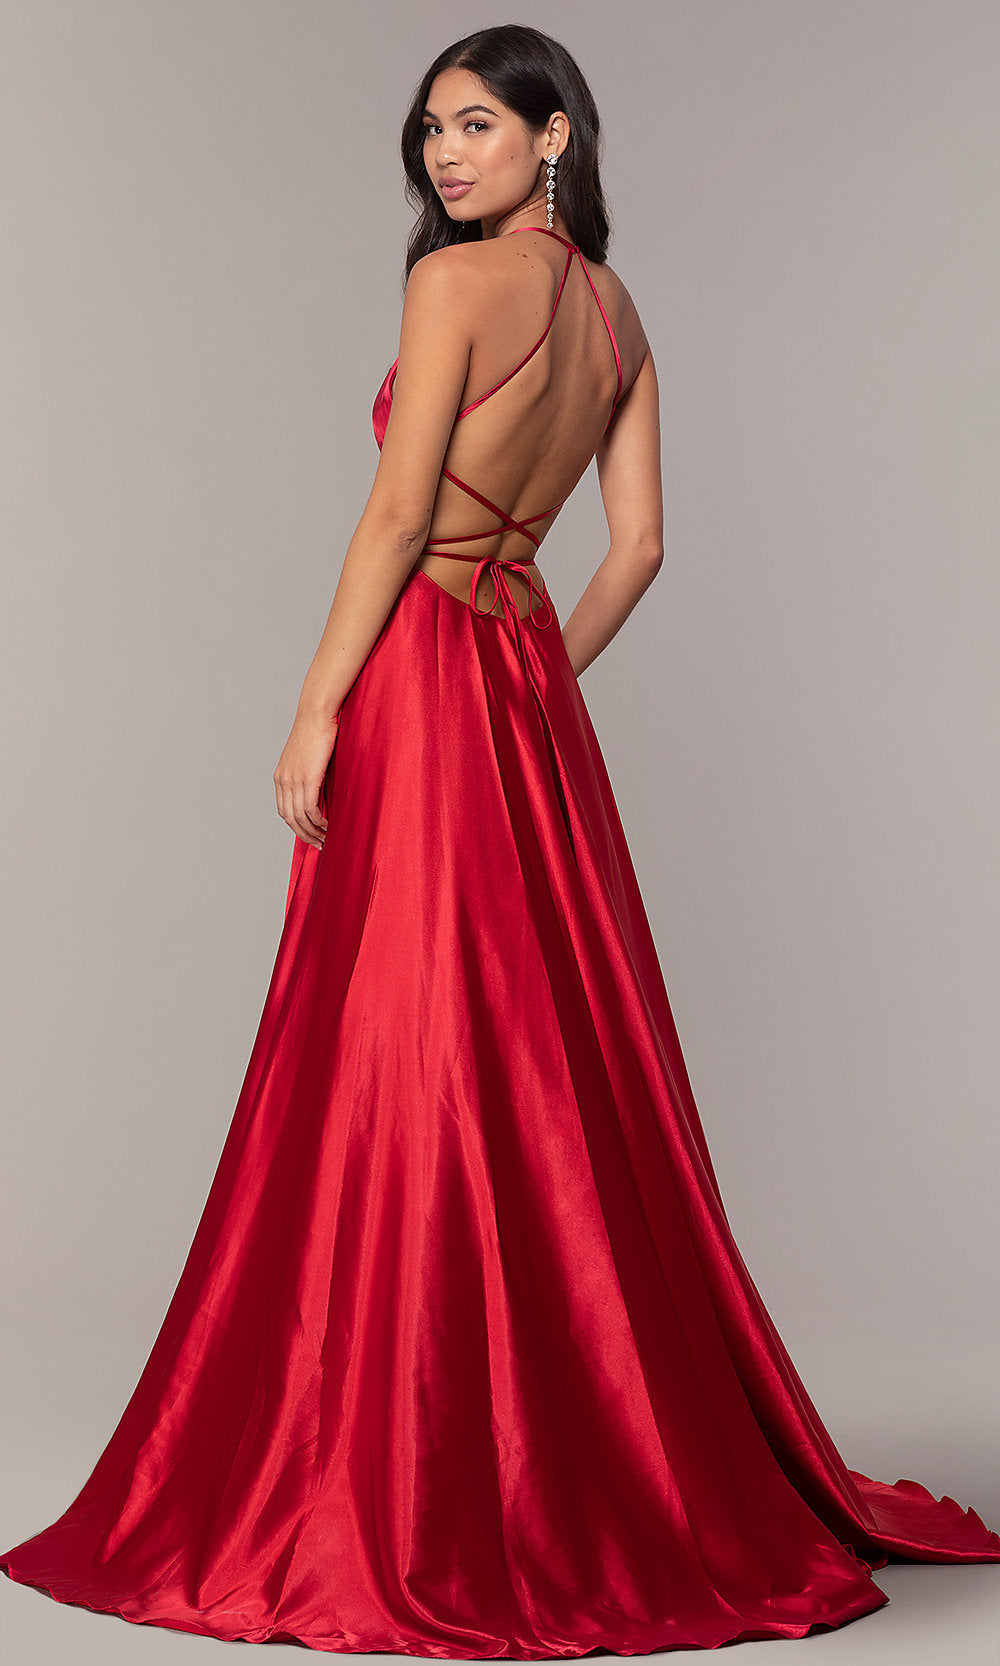  Faviana Long Open-Back Satin Formal Dress with Pockets